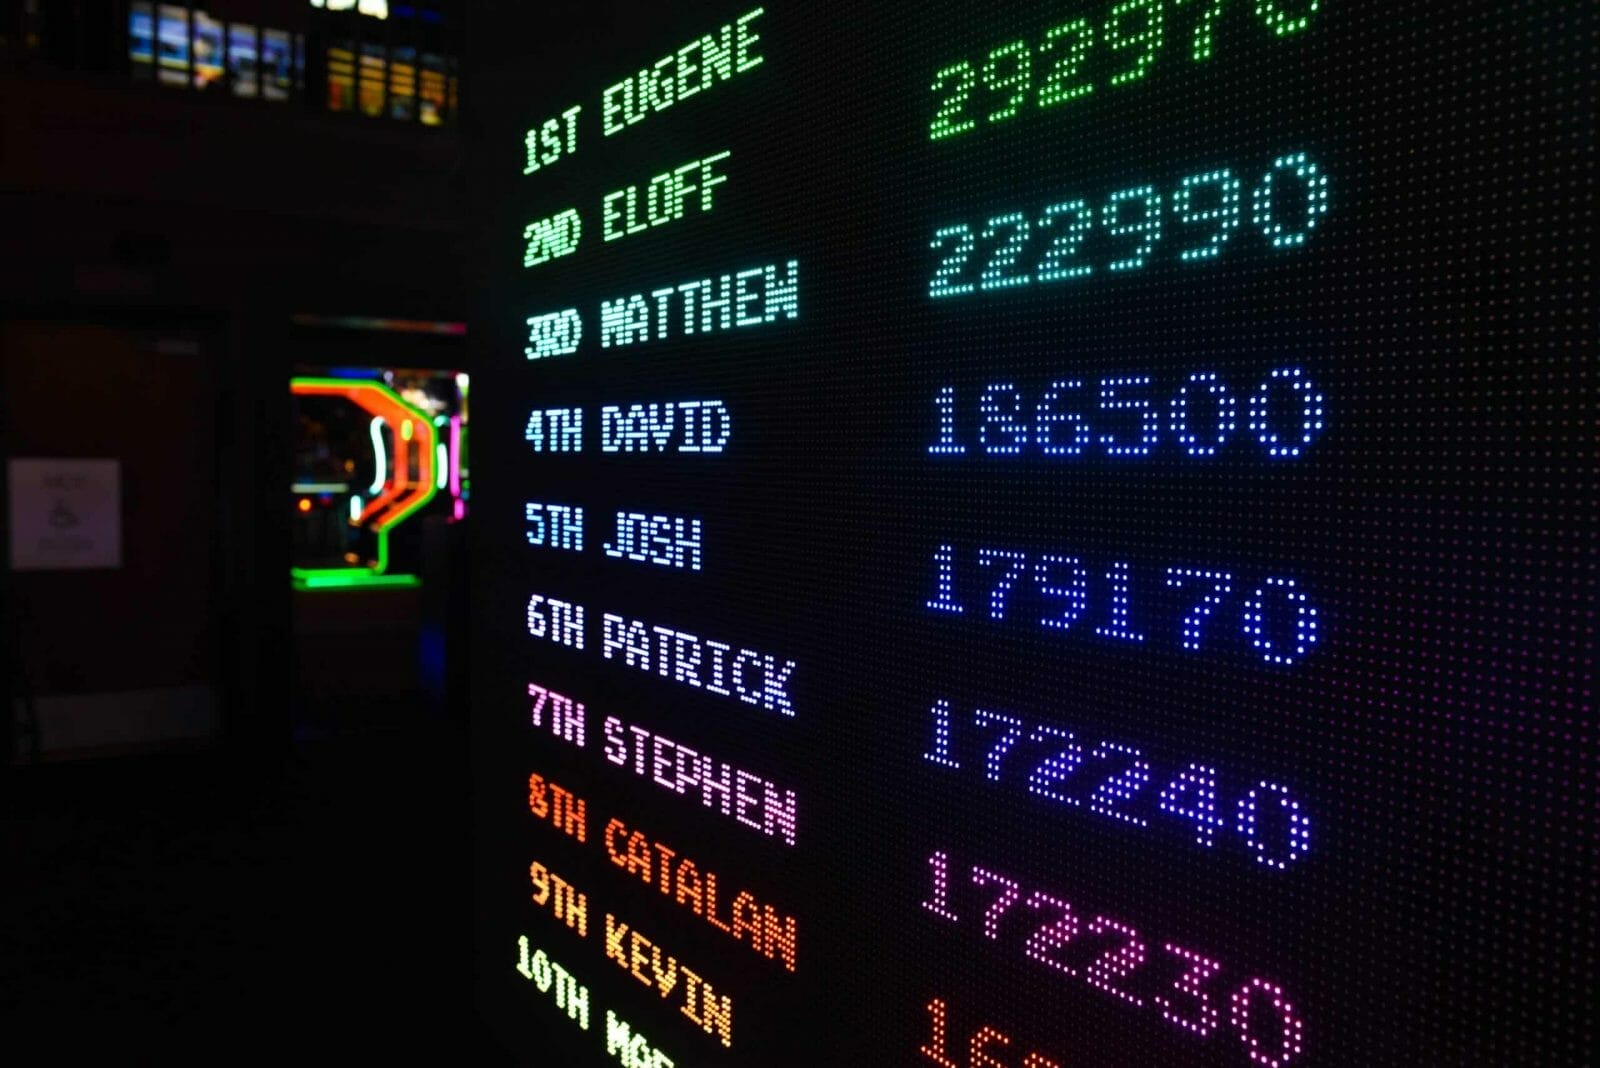 An image showing a scoreboard